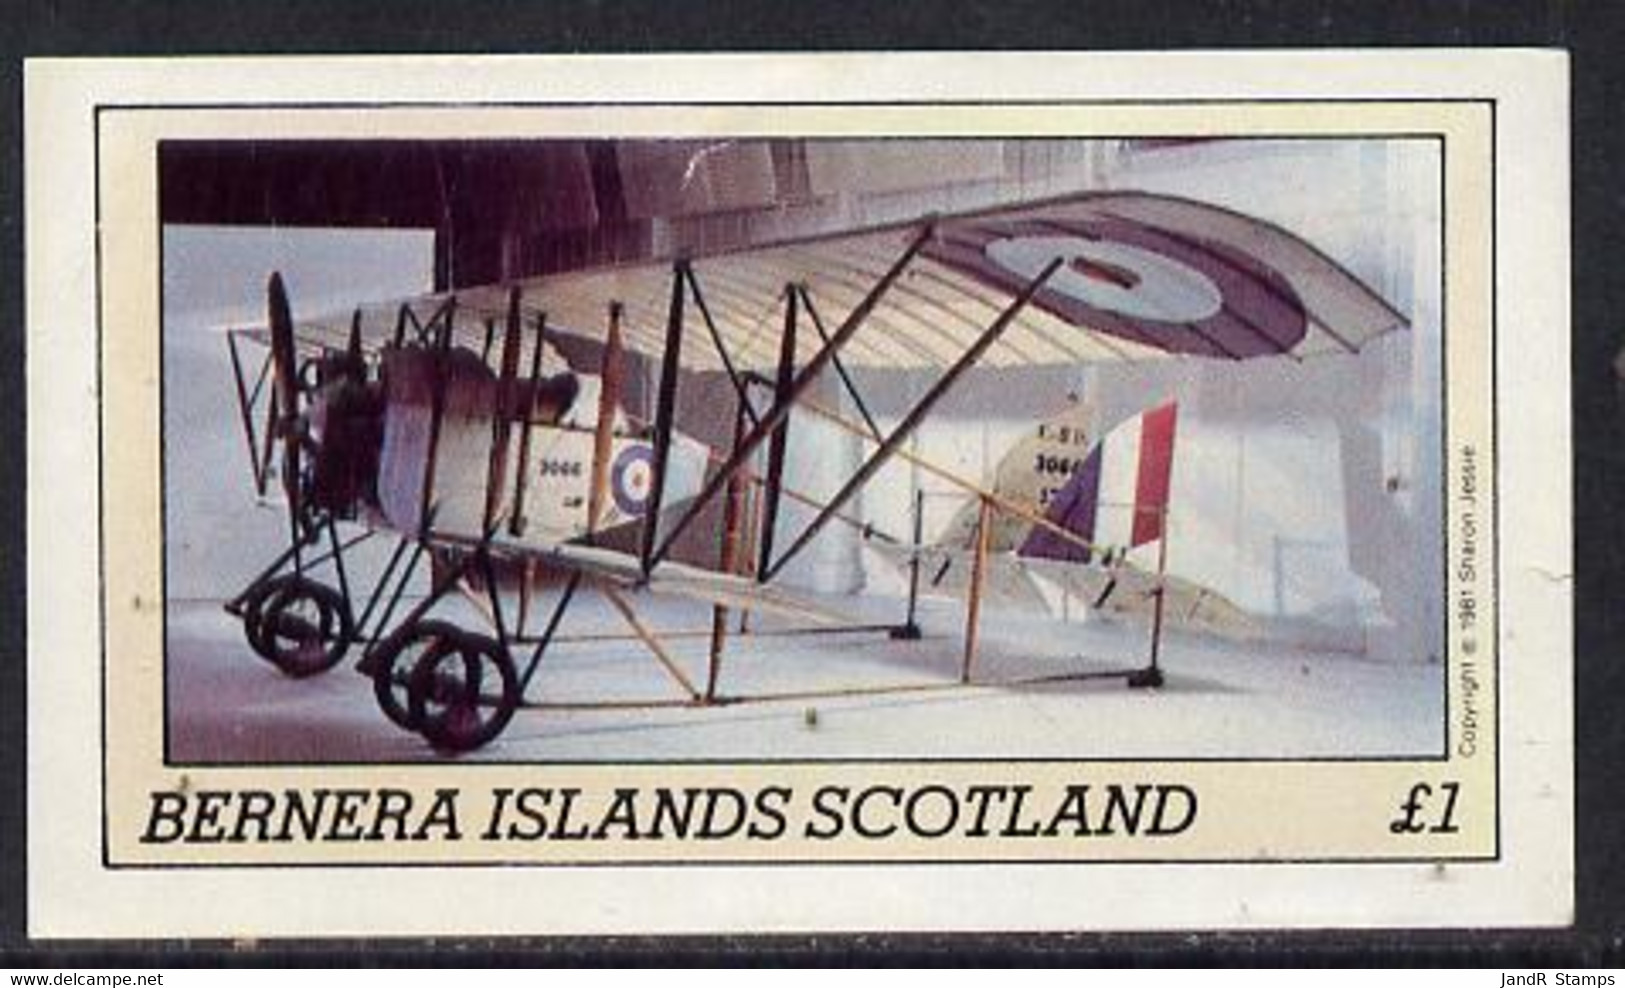 Bernera 1981 Museum Aircraft Imperf Souvenir Sheet (�1 Value) MNH - Local Issues